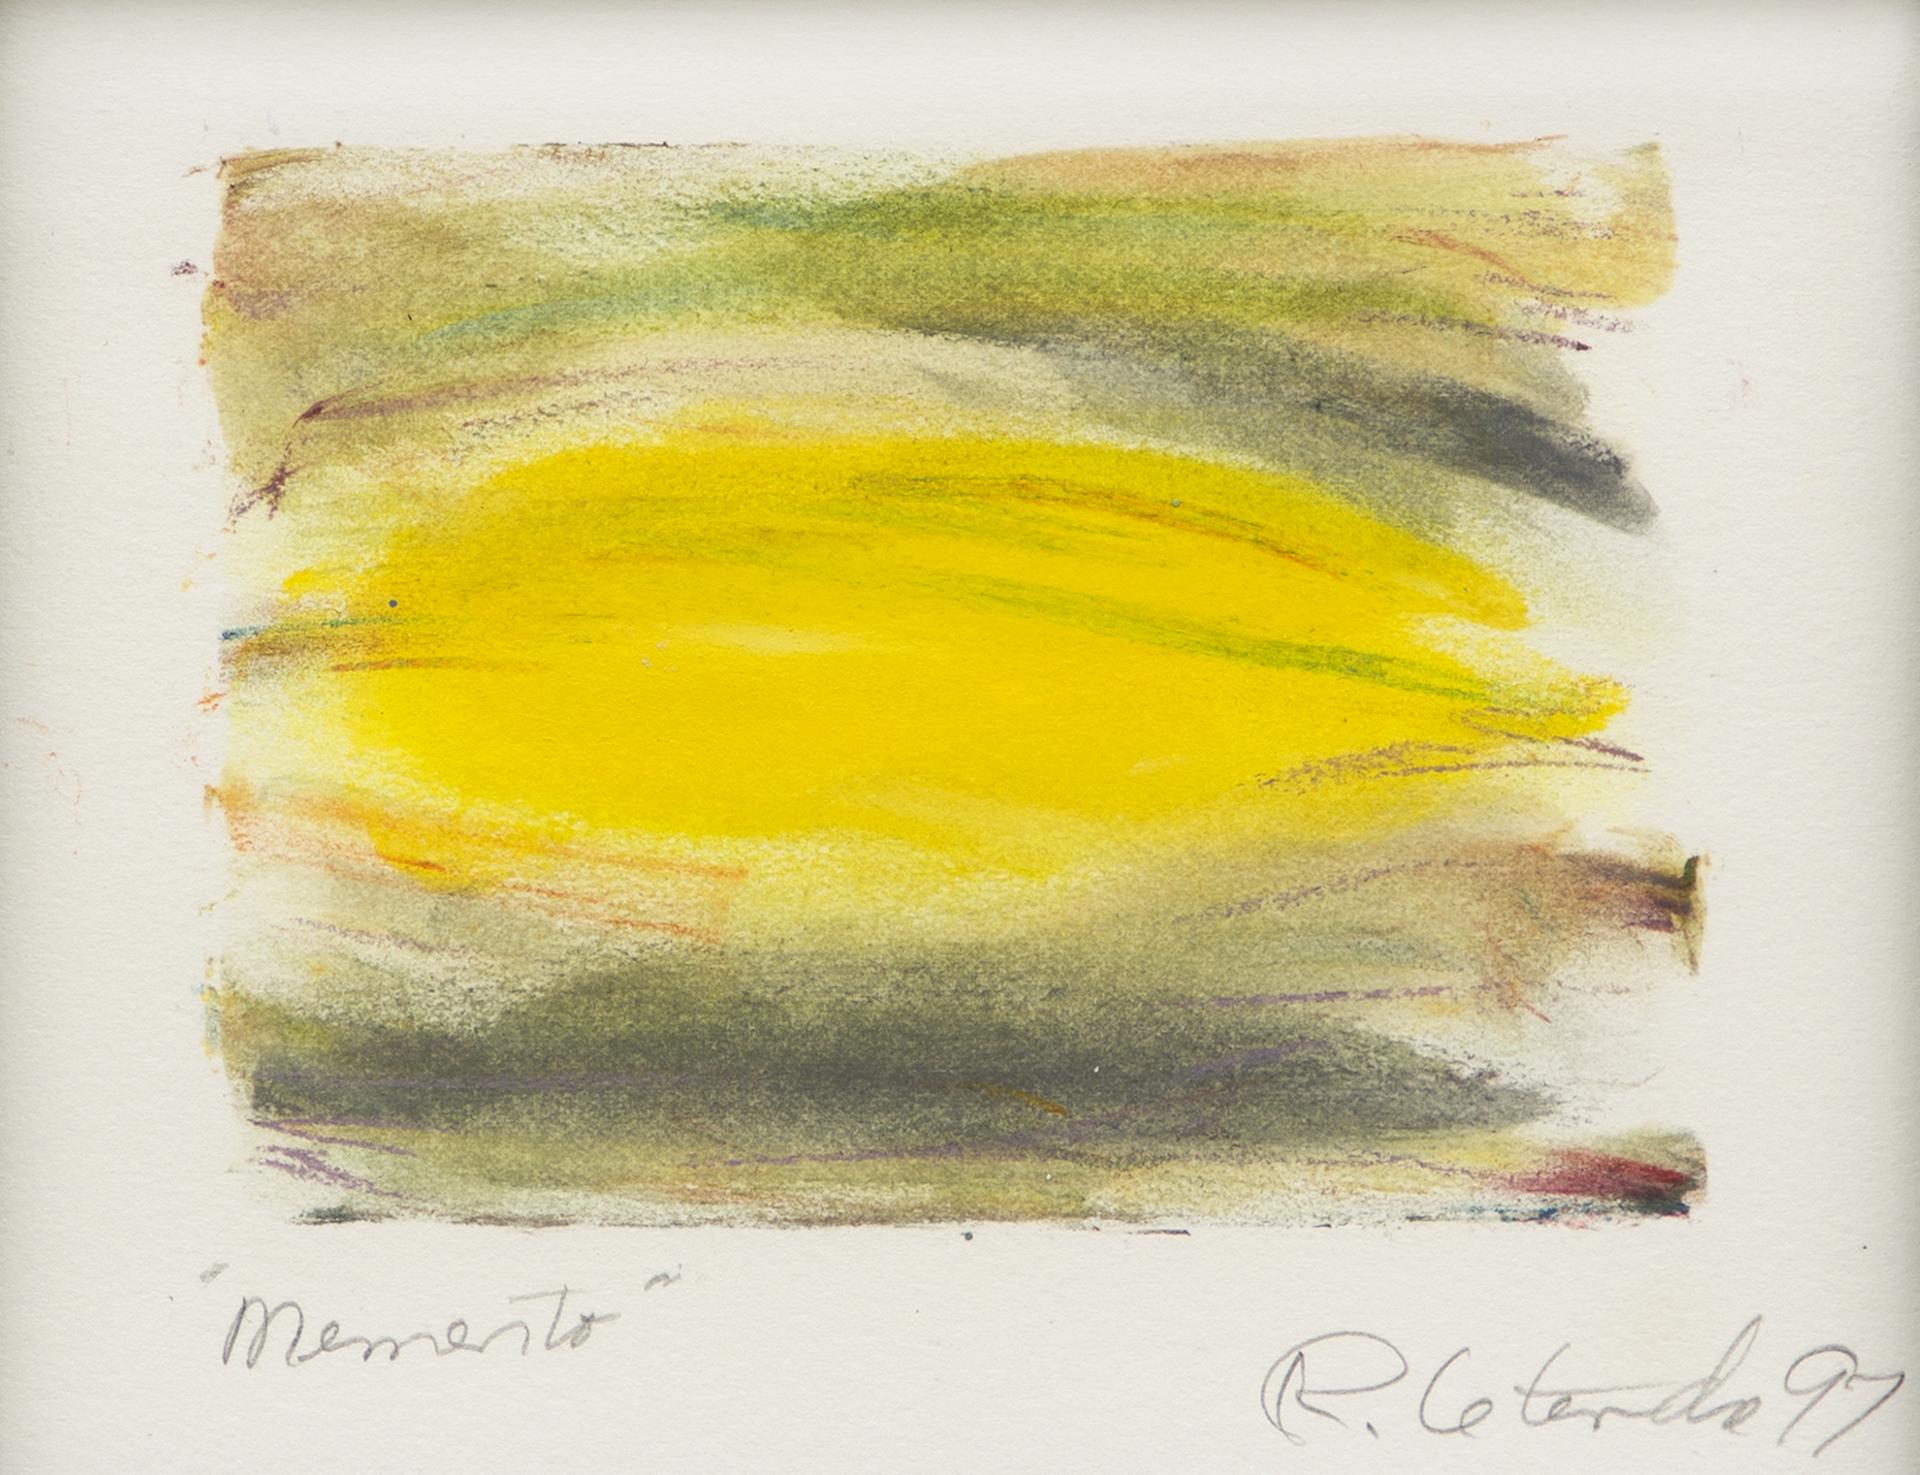 Rita Letendre (1928-2021) - Memento, 1997